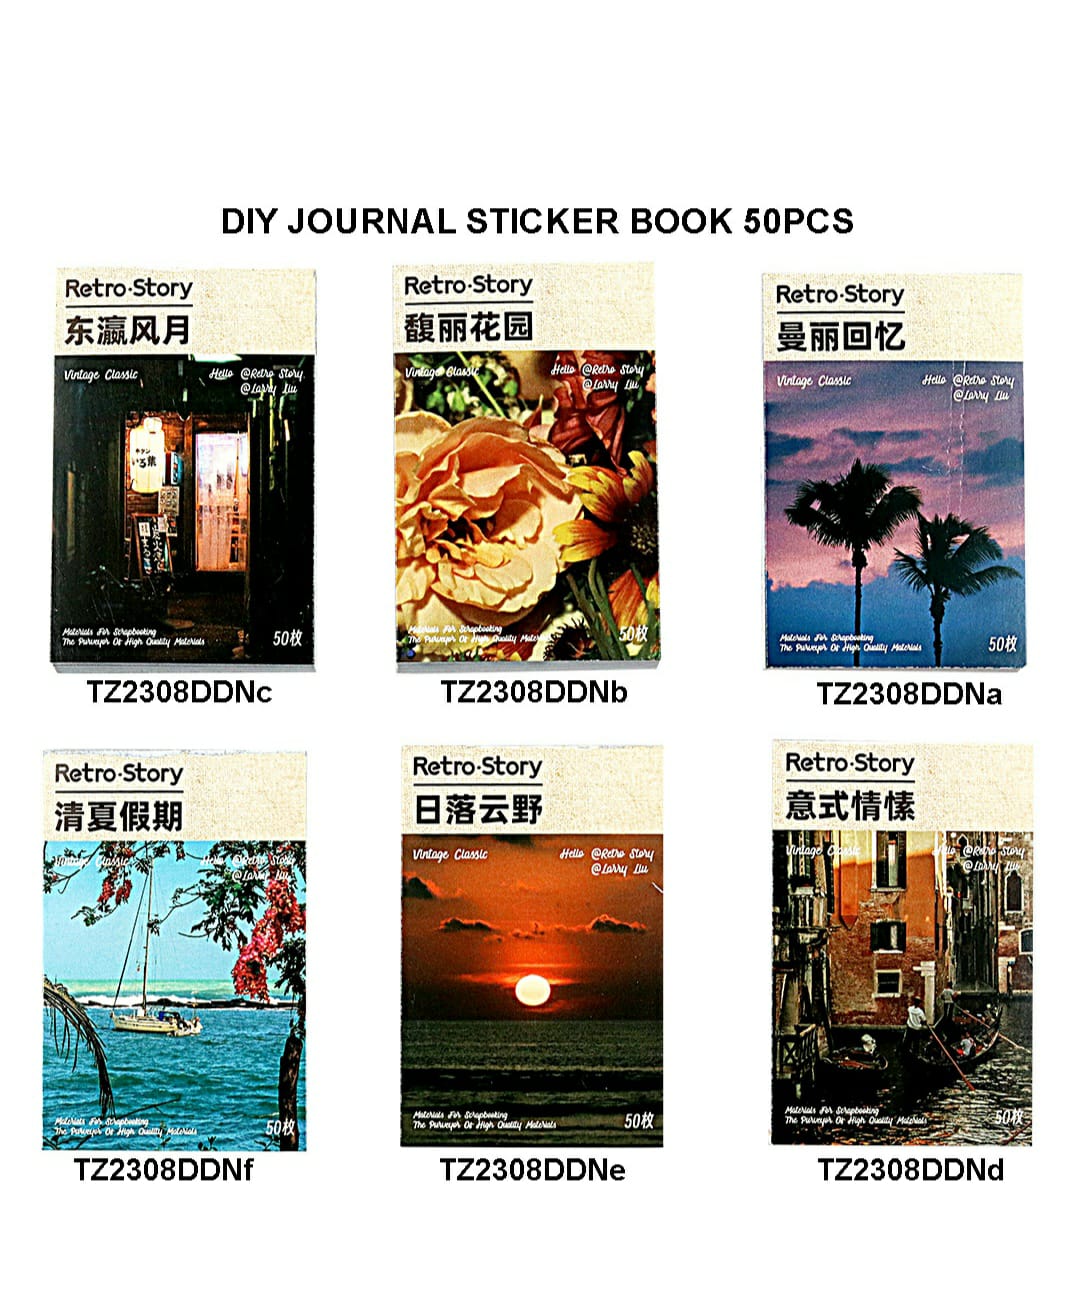 Diy Journal Sticker Book 50Pcs 259 Tz2308Ddn | INKARTO